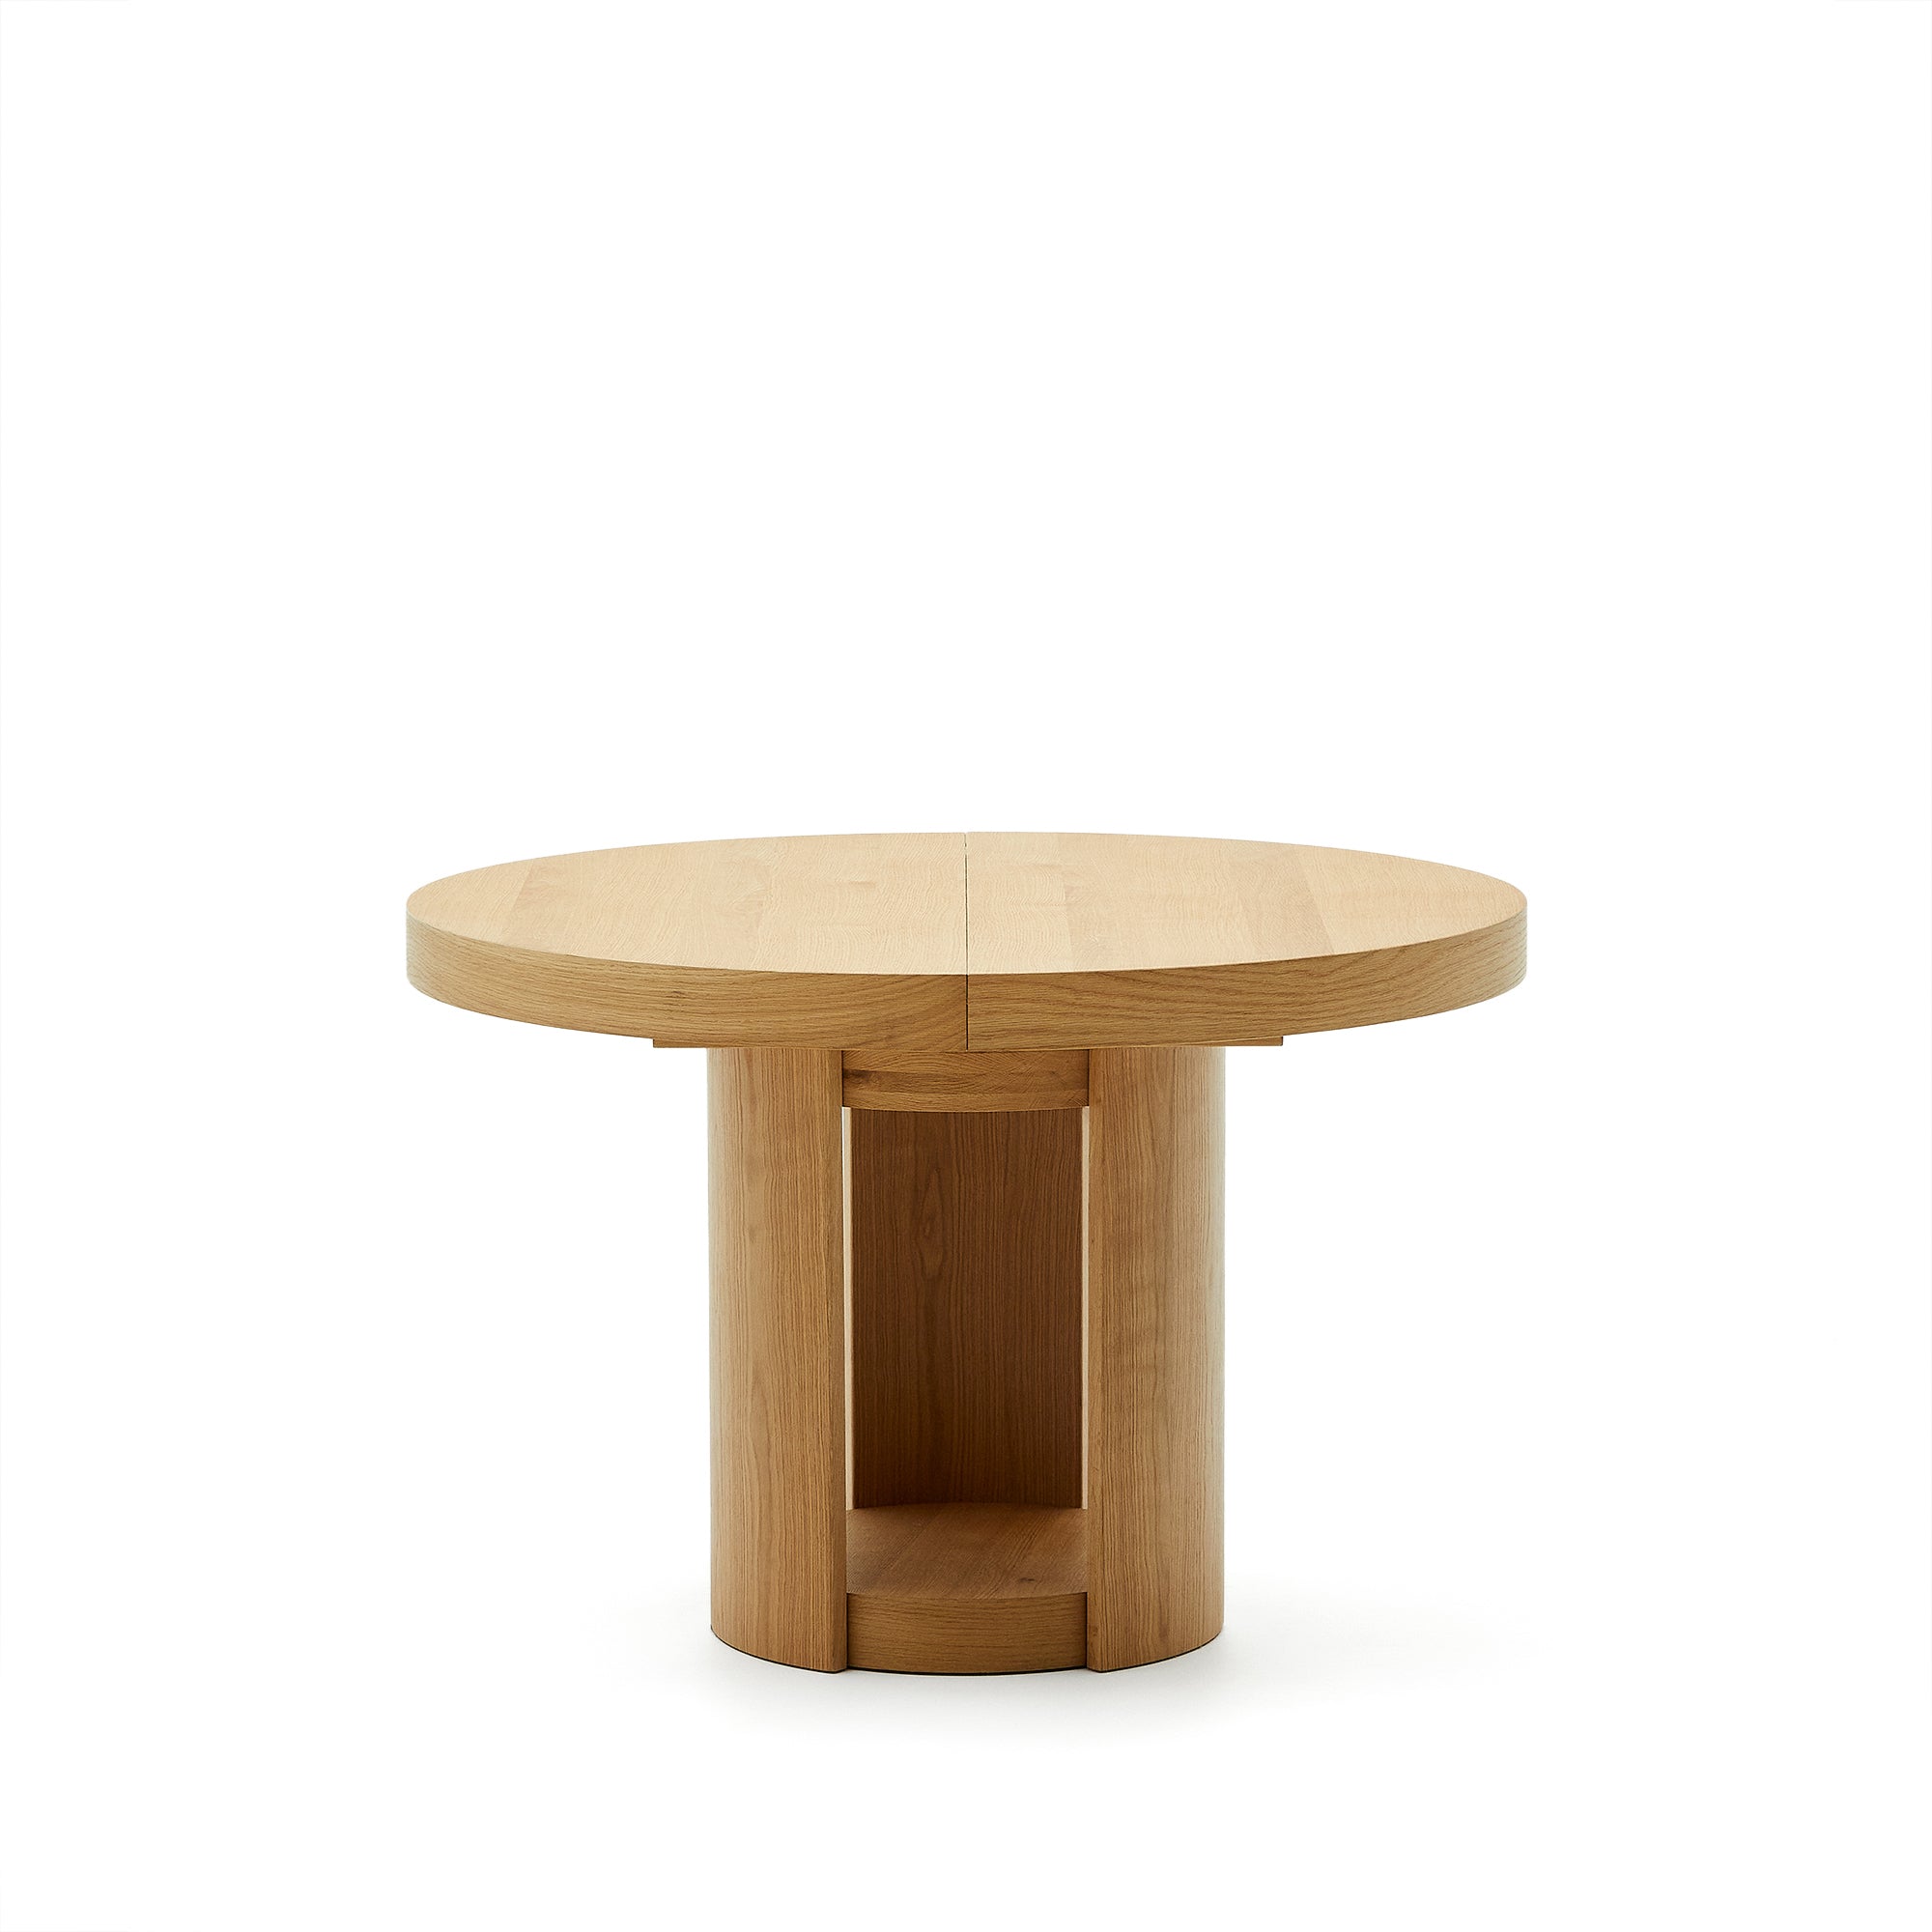 Artis extendable round table solid wood and oak veneer 100% FSC, 120 (170) cm x 80 cm